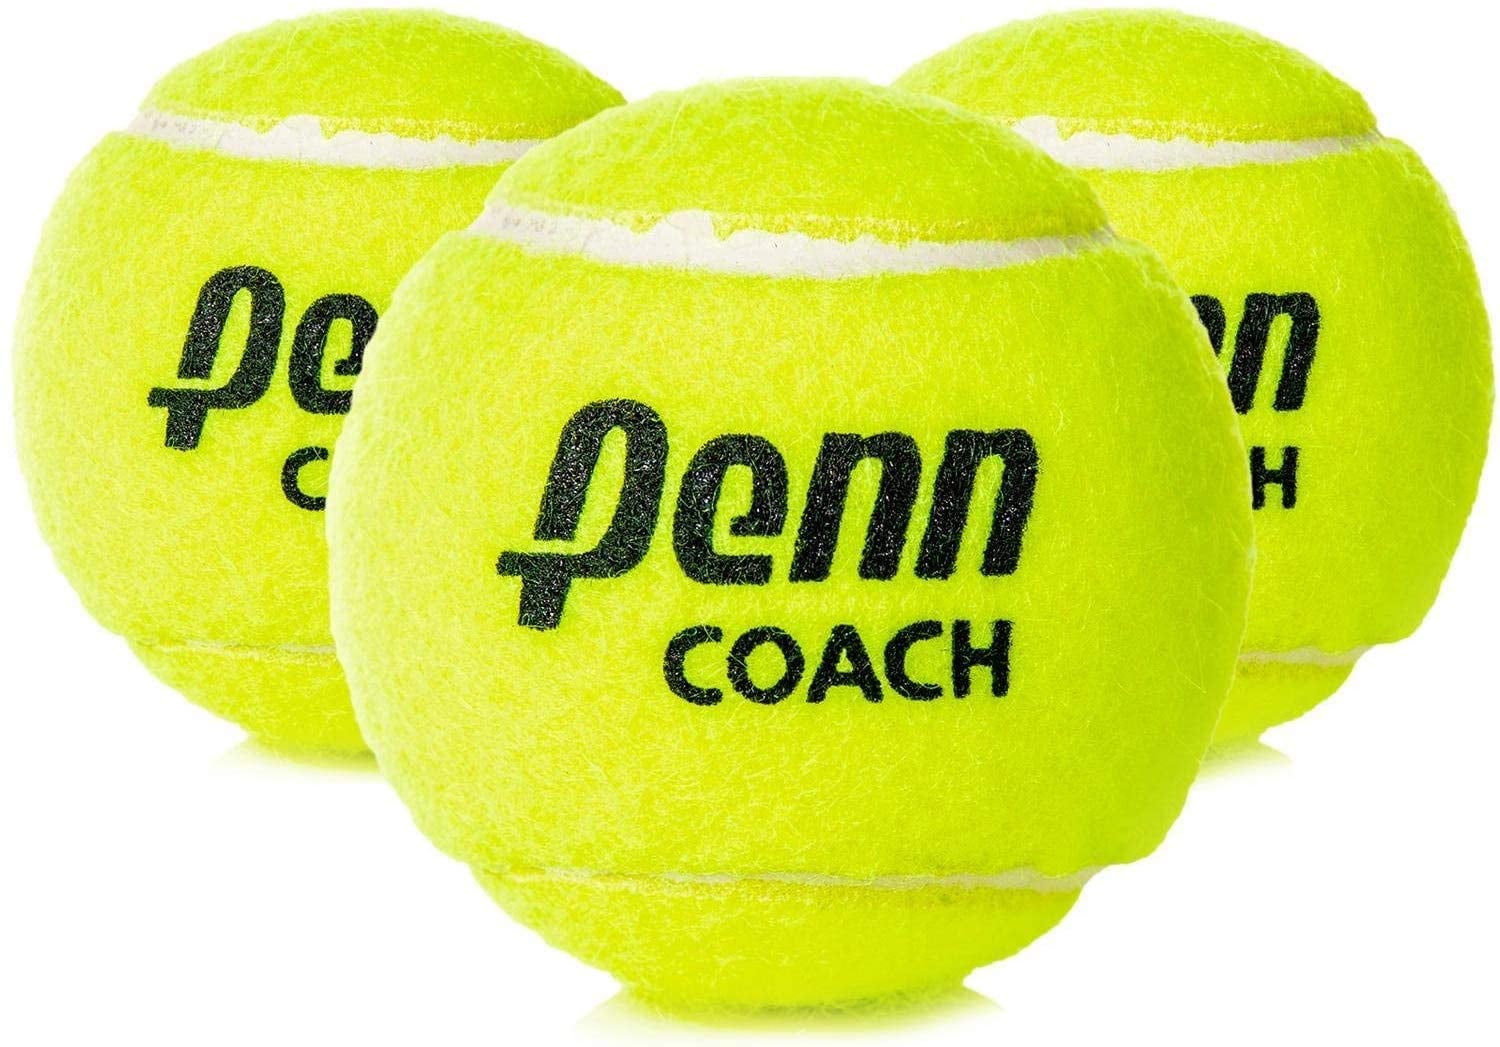 12 x Penn® Practice/Coach Tennis Balls Cans of 3 